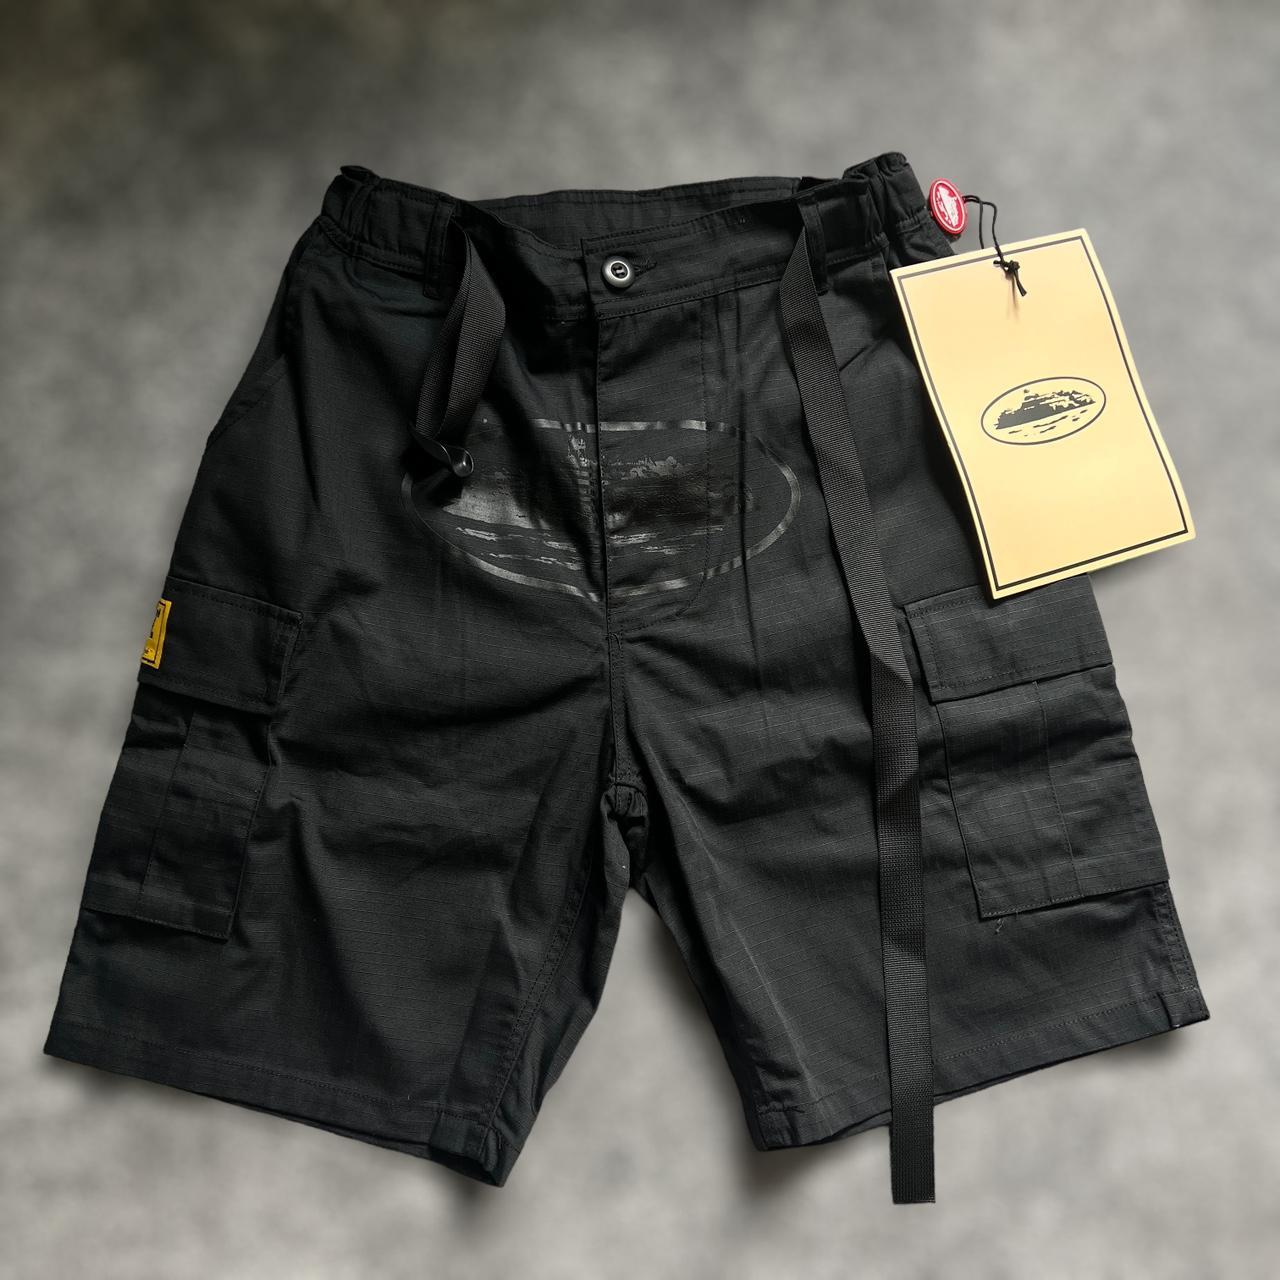 Corteiz Men's Black and Yellow Shorts | Depop